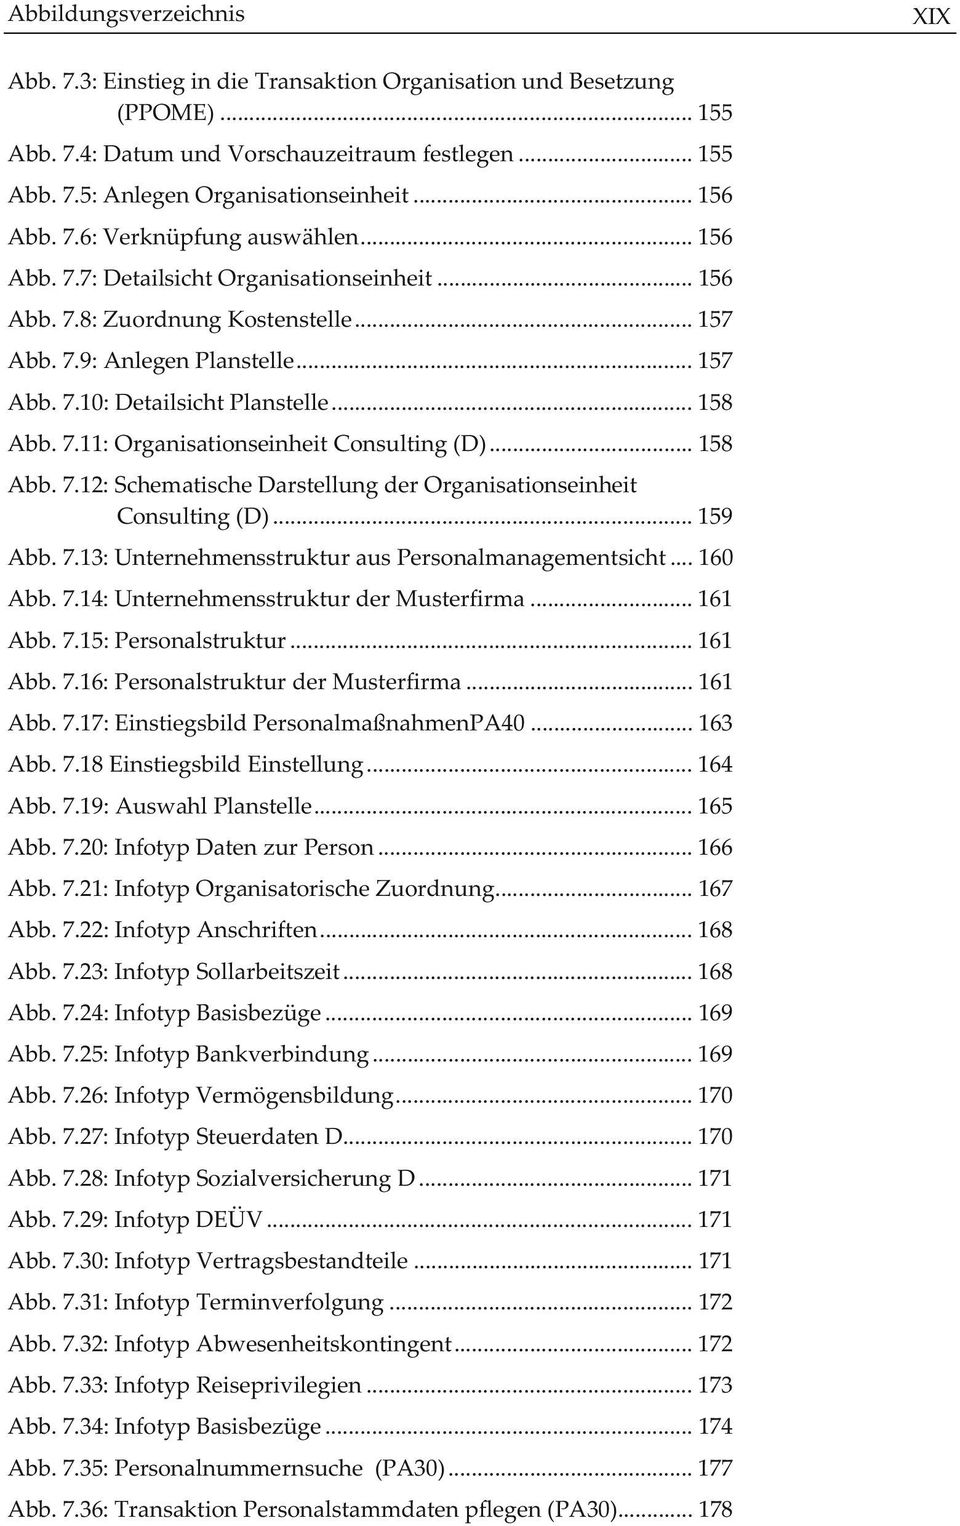 .. 158 Abb. 7.11: Organisationseinheit Consulting (D)... 158 Abb. 7.12: Schematische Darstellung der Organisationseinheit Consulting (D)... 159 Abb. 7.13: Unternehmensstruktur aus Personalmanagementsicht.